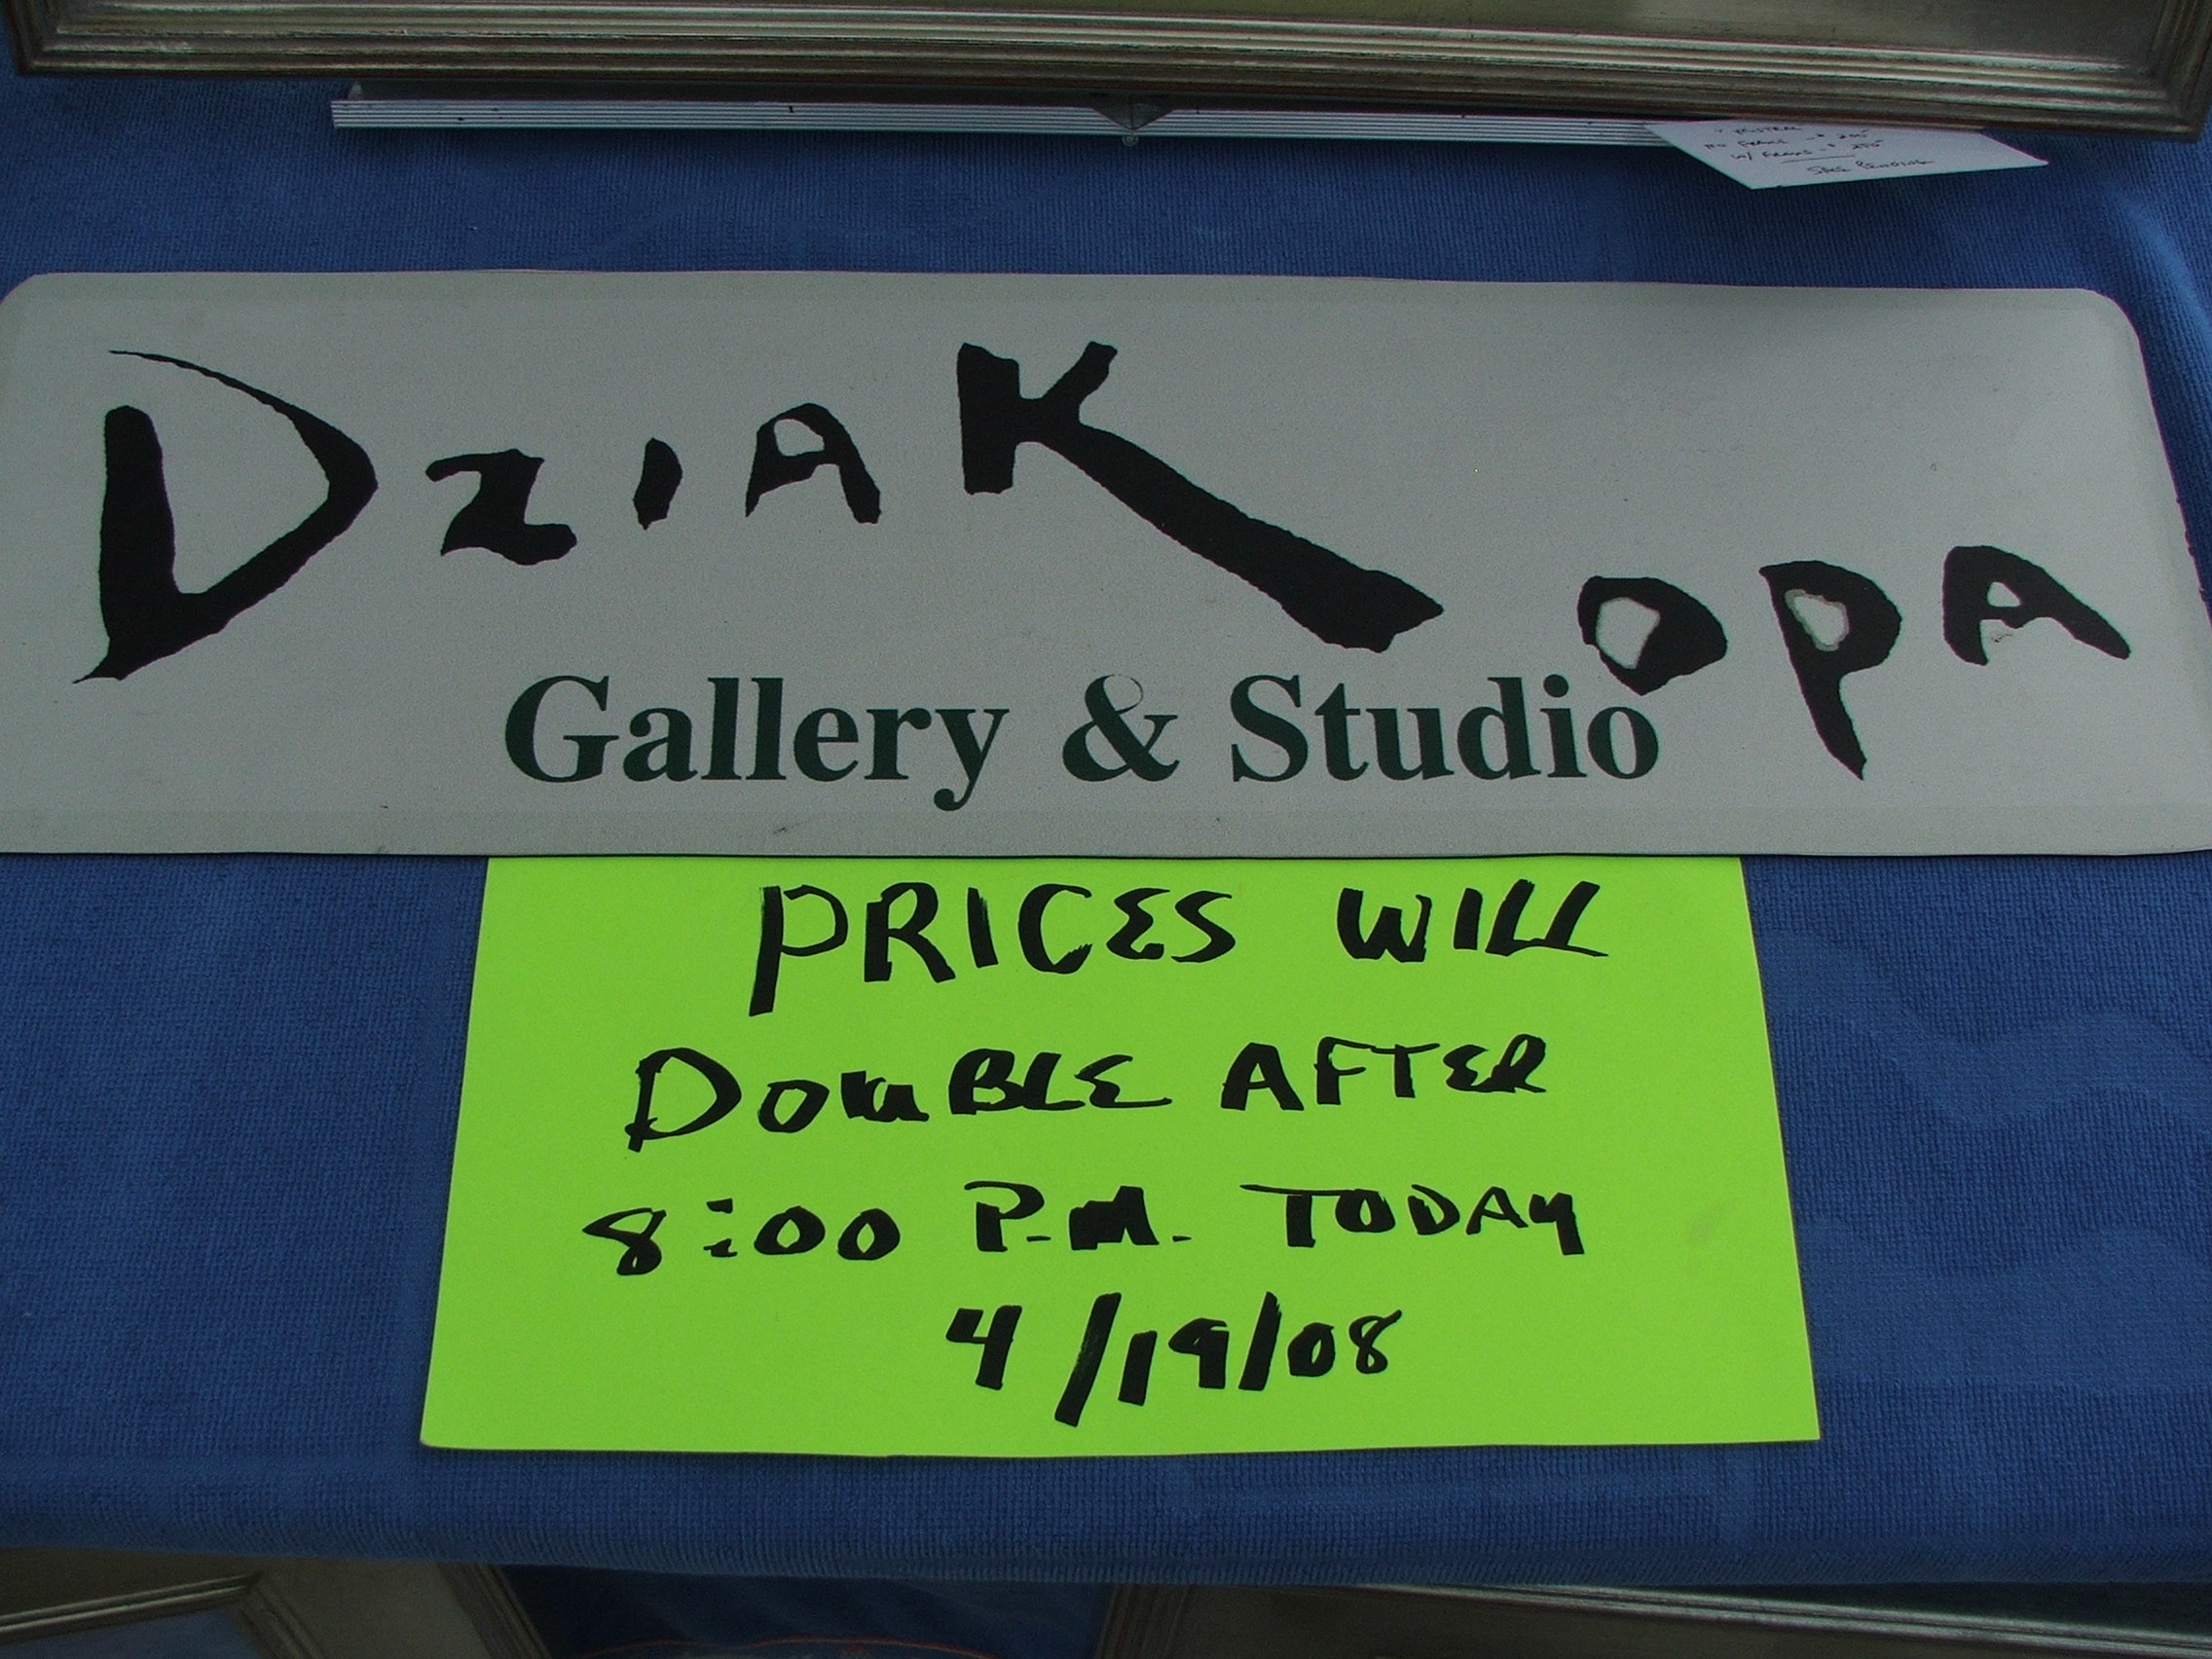 Florida Art Show - Rick Dziak's new pricing policy